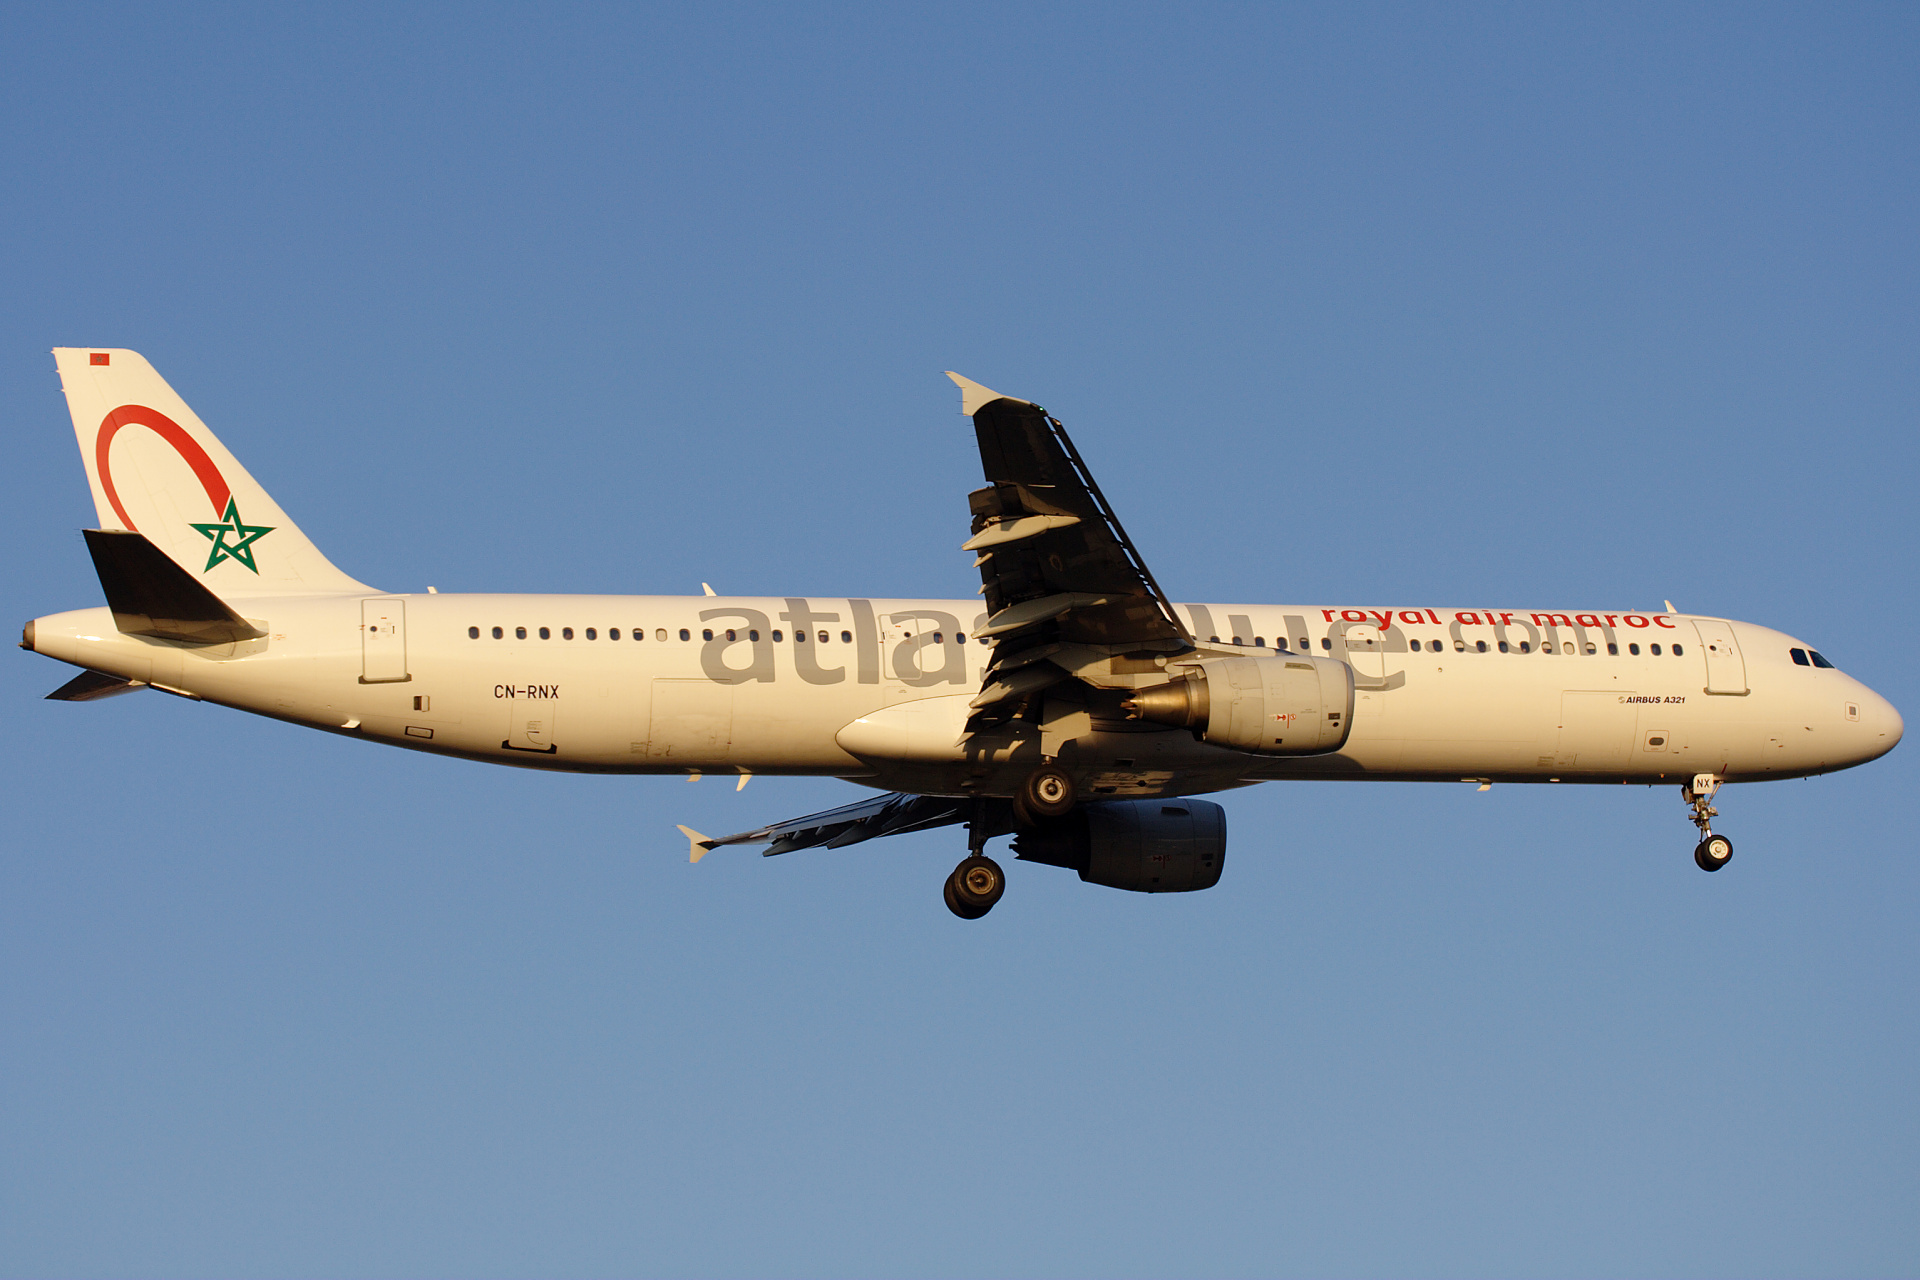 CN-RNX, Atlas Blue - Royal Air Maroc (Aircraft » EPWA Spotting » Airbus A321-200)